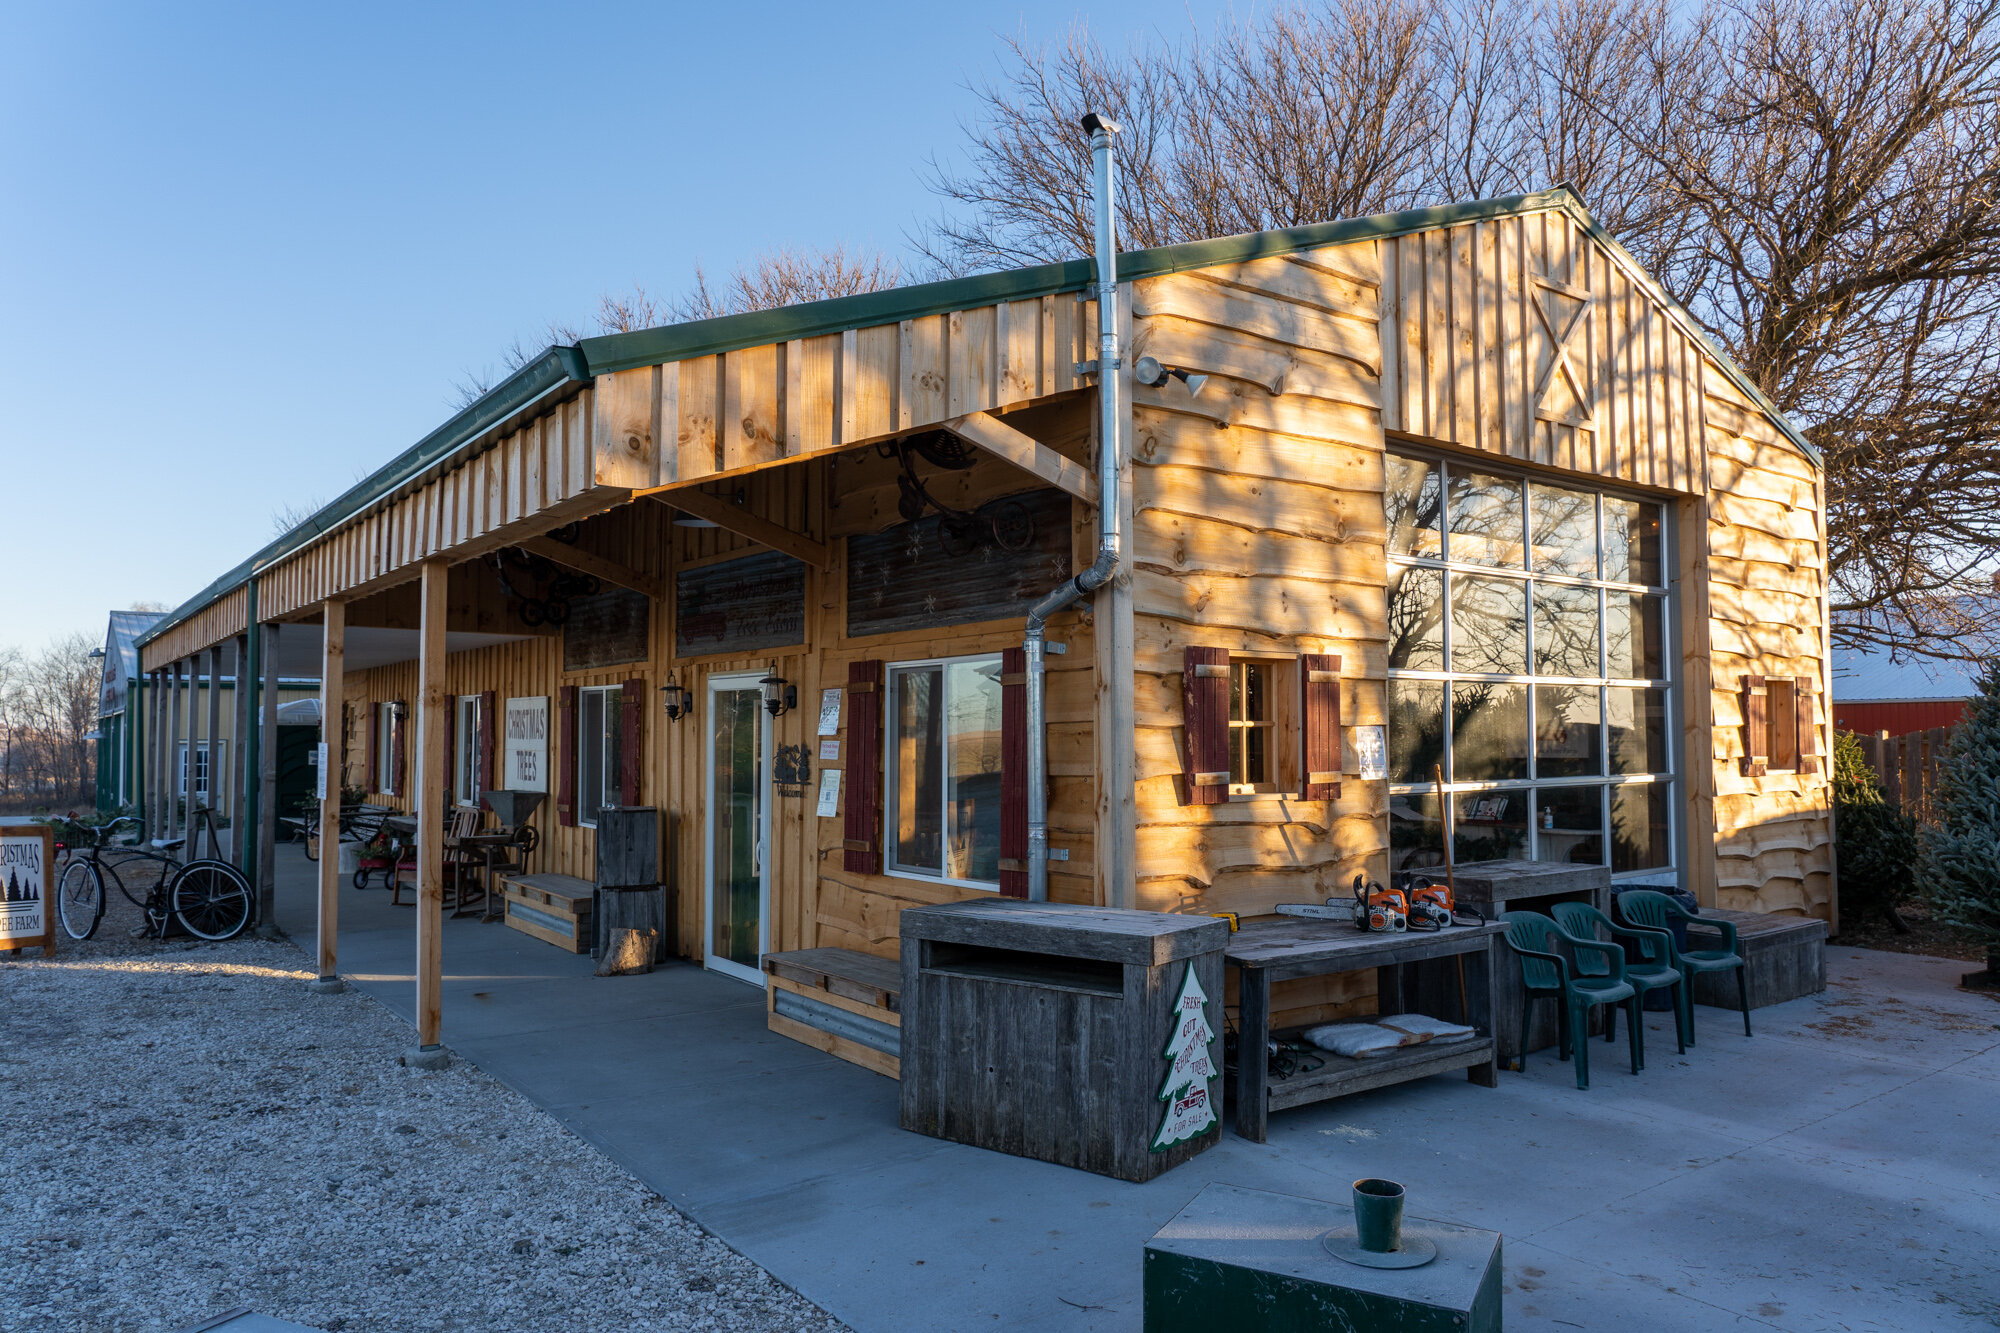  Nordstrom's Tree Farm   Heated Sales Barn  